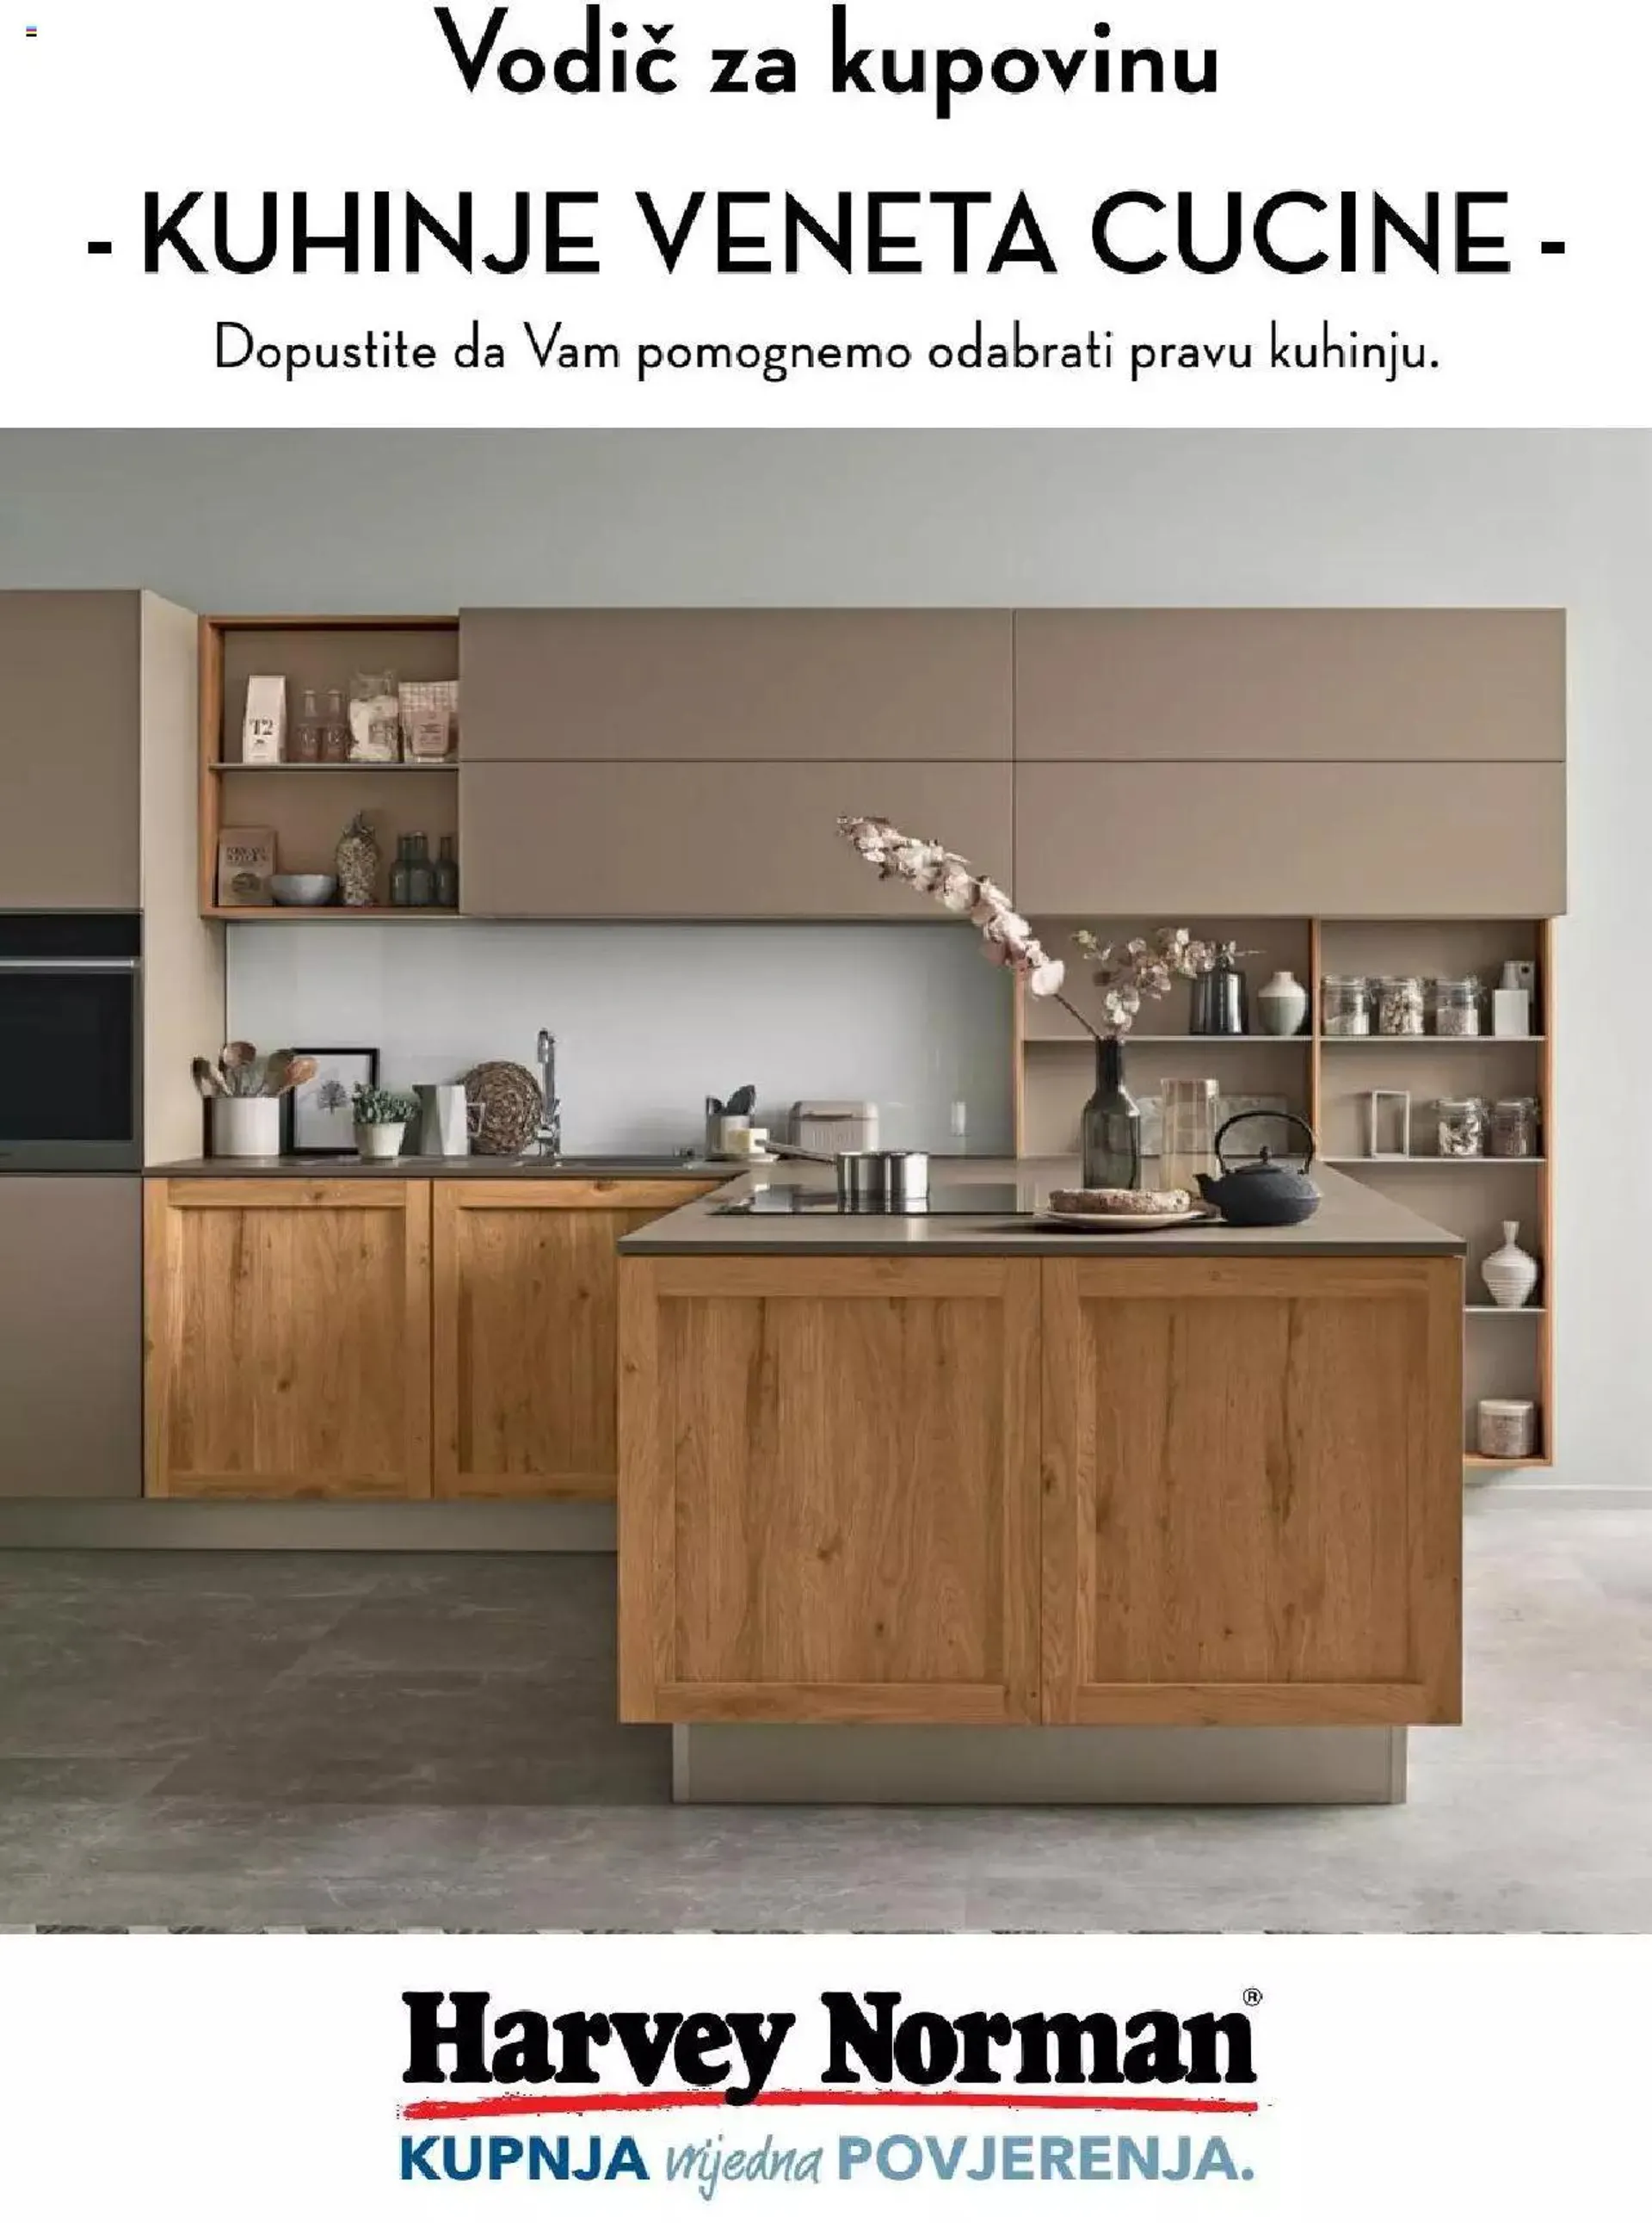 Katalog Kuhinje Veneta Cucine Harvey Norman - 0